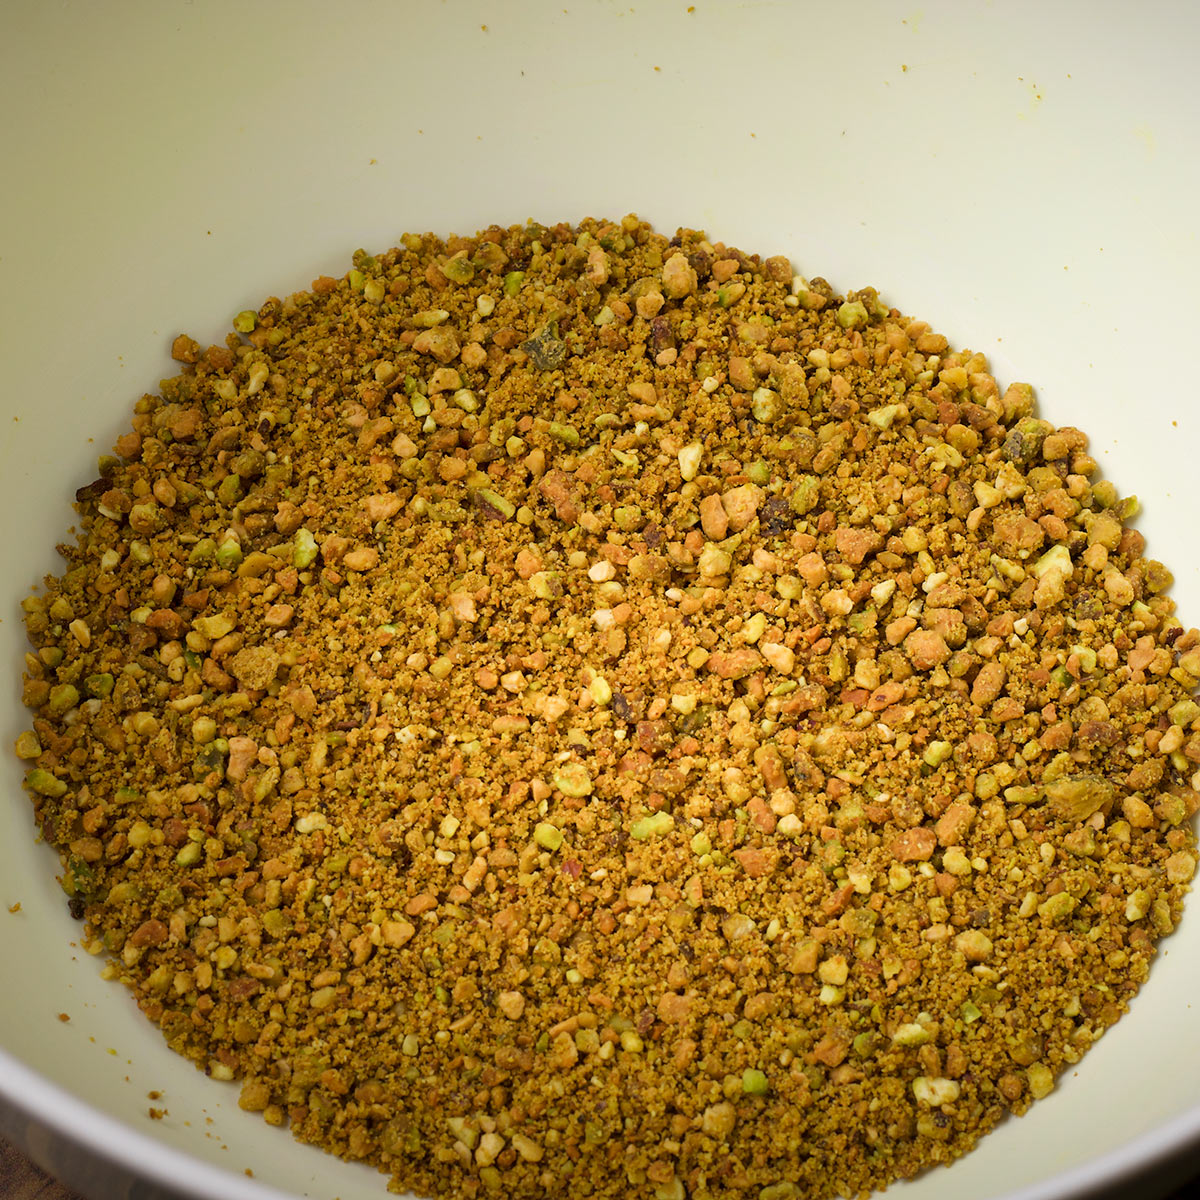 A bowl containing ground pistachios.